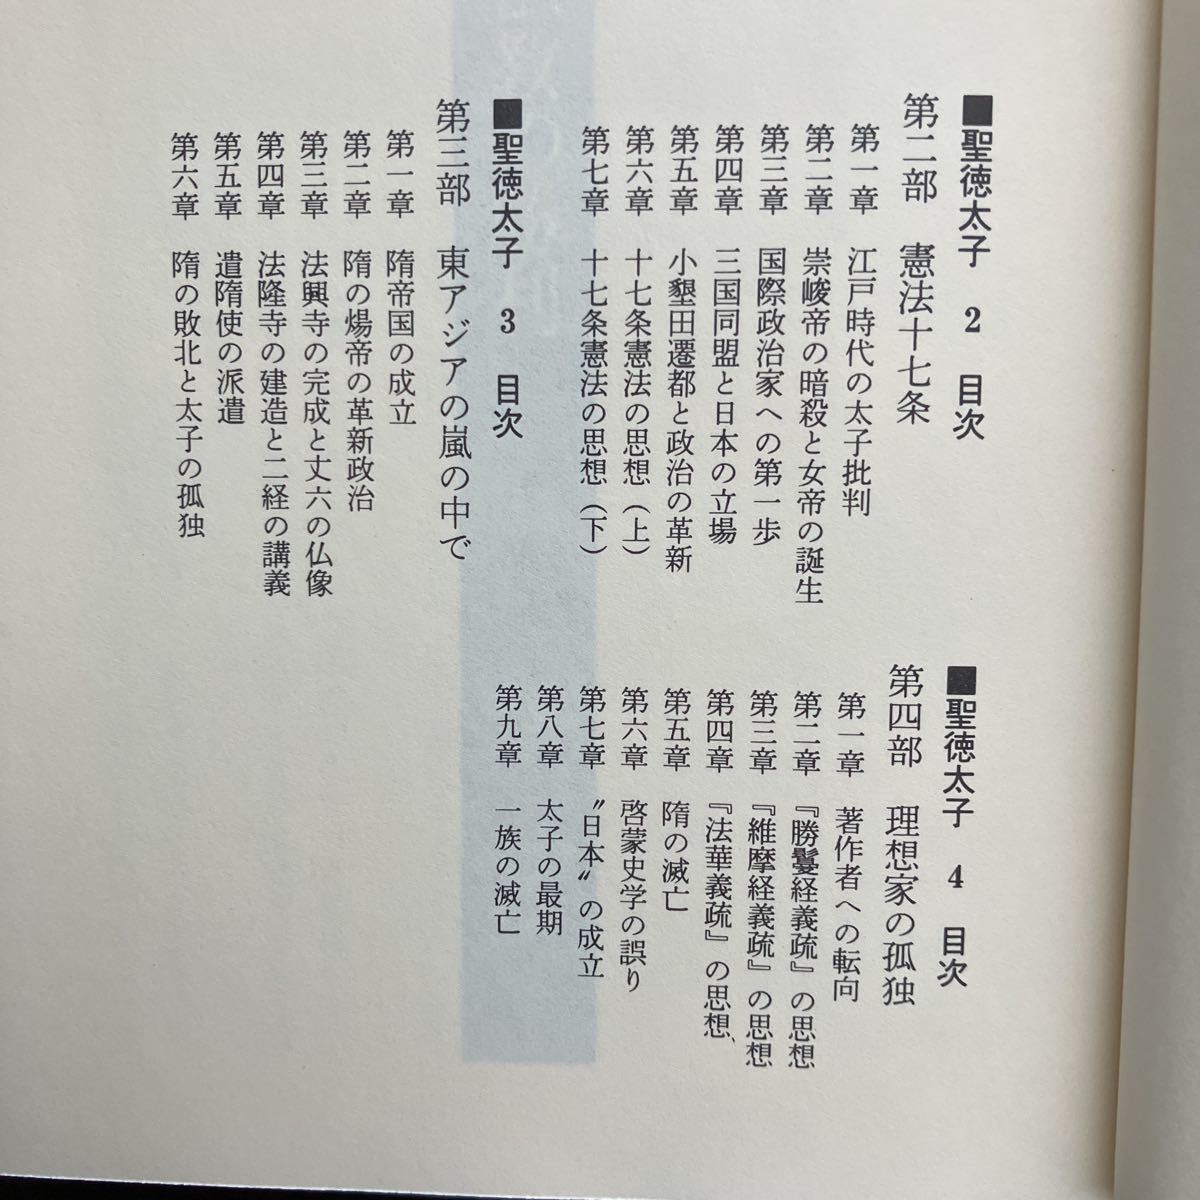 聖徳太子 Ⅰ 、Ⅱ 梅原猛 2冊セット - 文学・小説